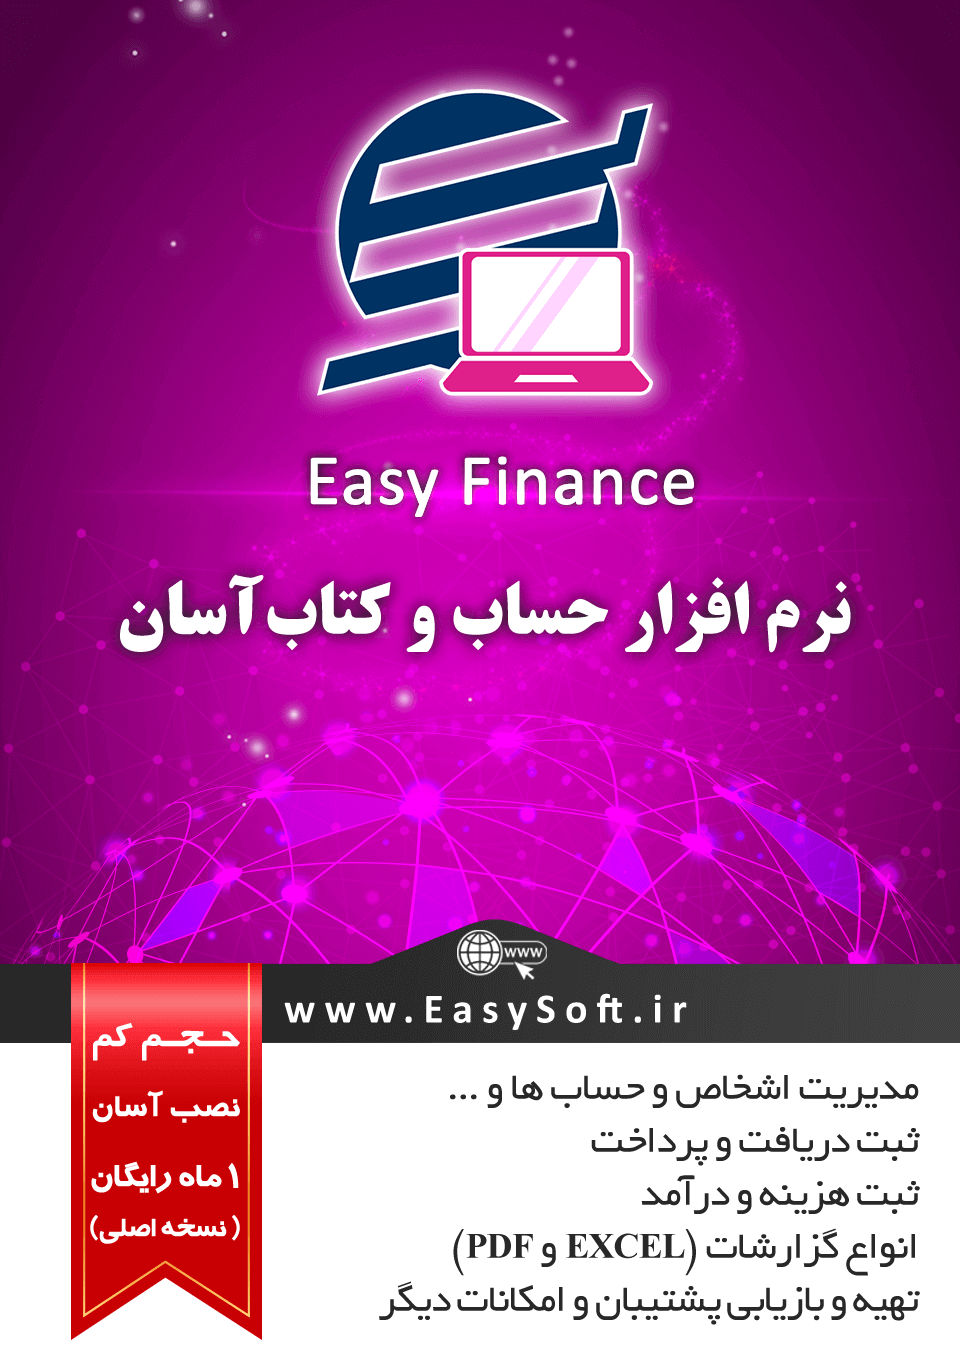 EasyFinance